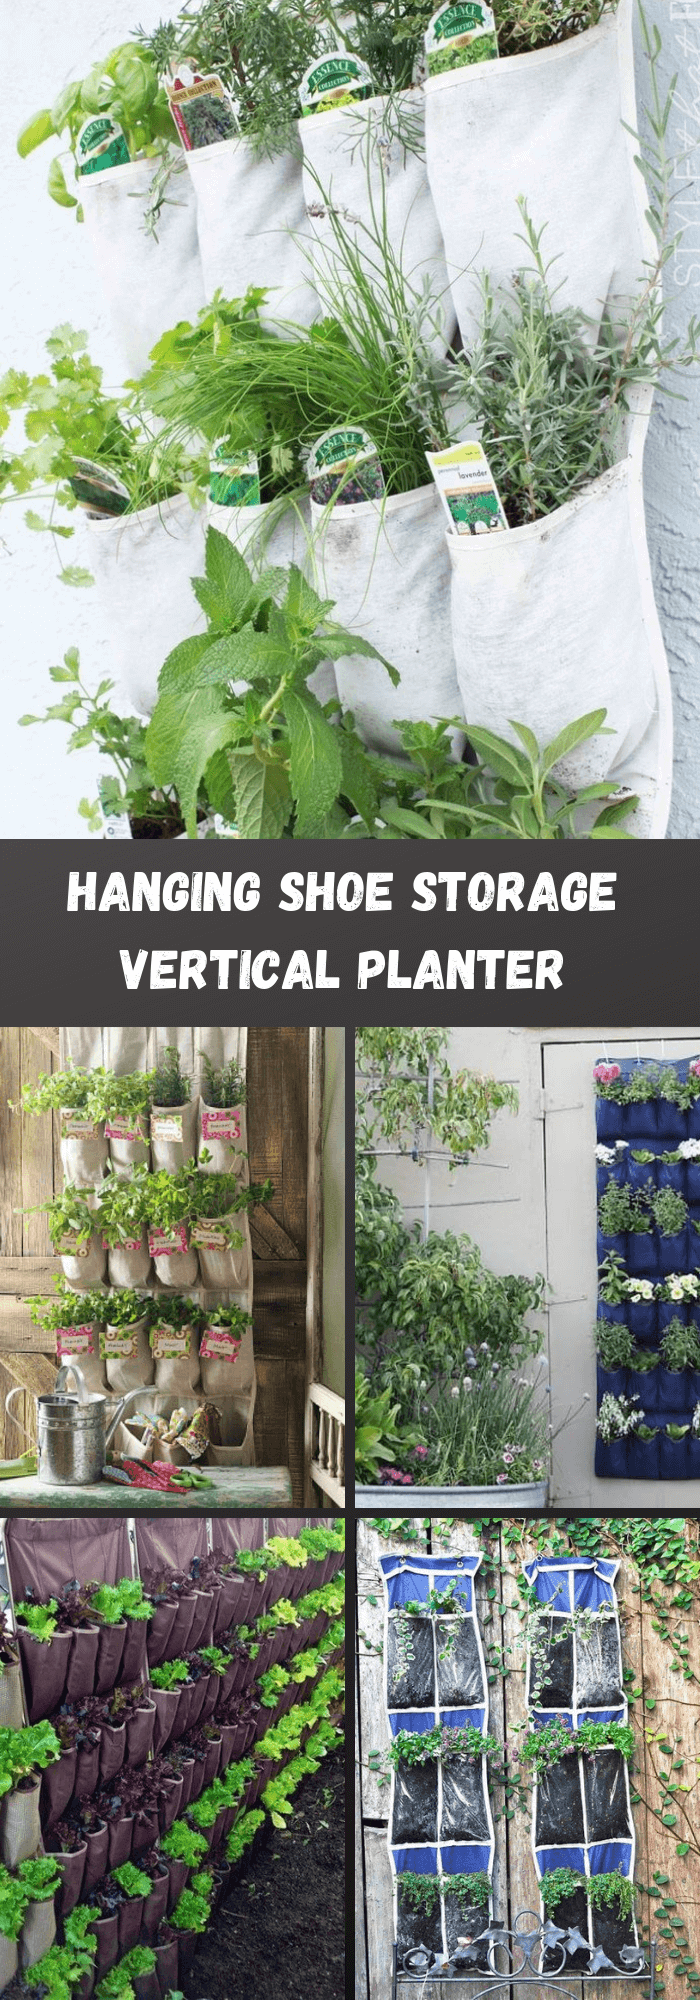 Hanging Shoe Storage Vertical Planter